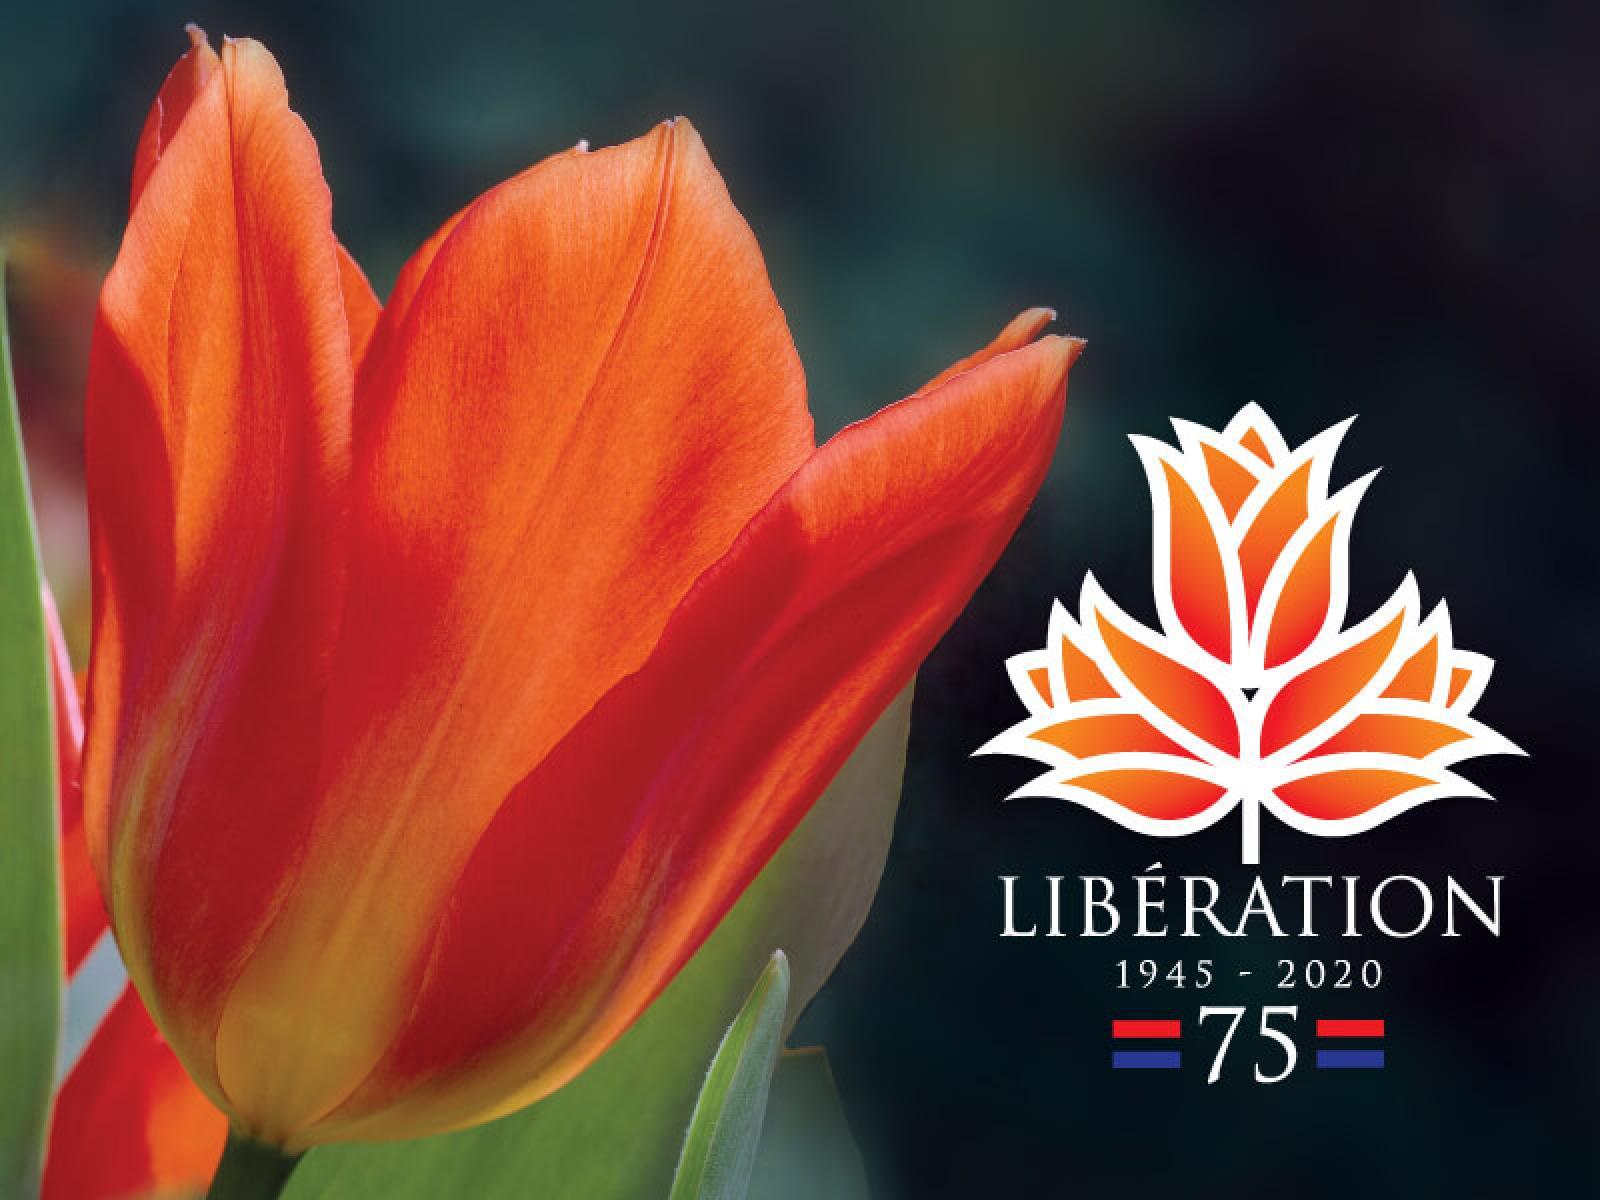 The Liberation75 Commemorative Planting Campaign